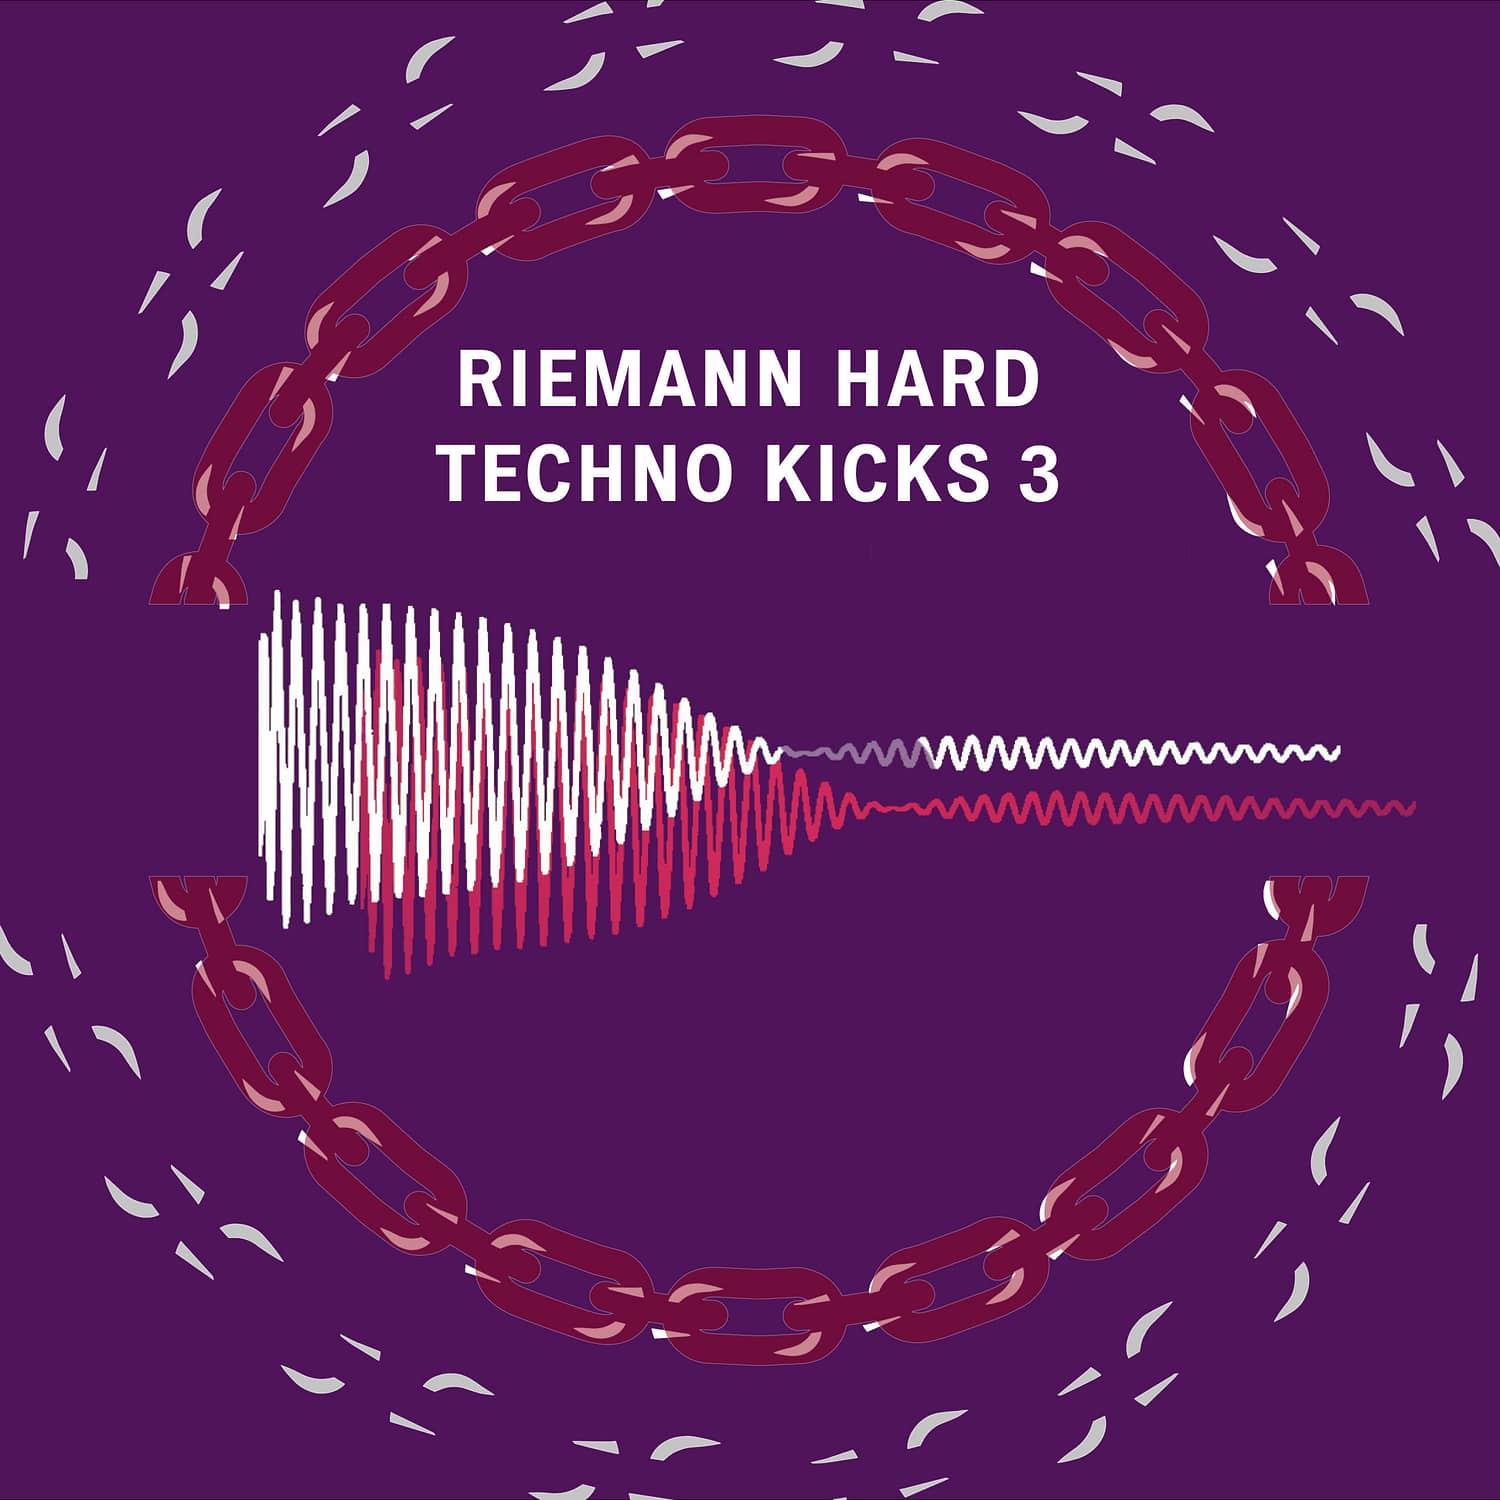 Riemann Hard Techno Kicks 3 - Cover Artwork